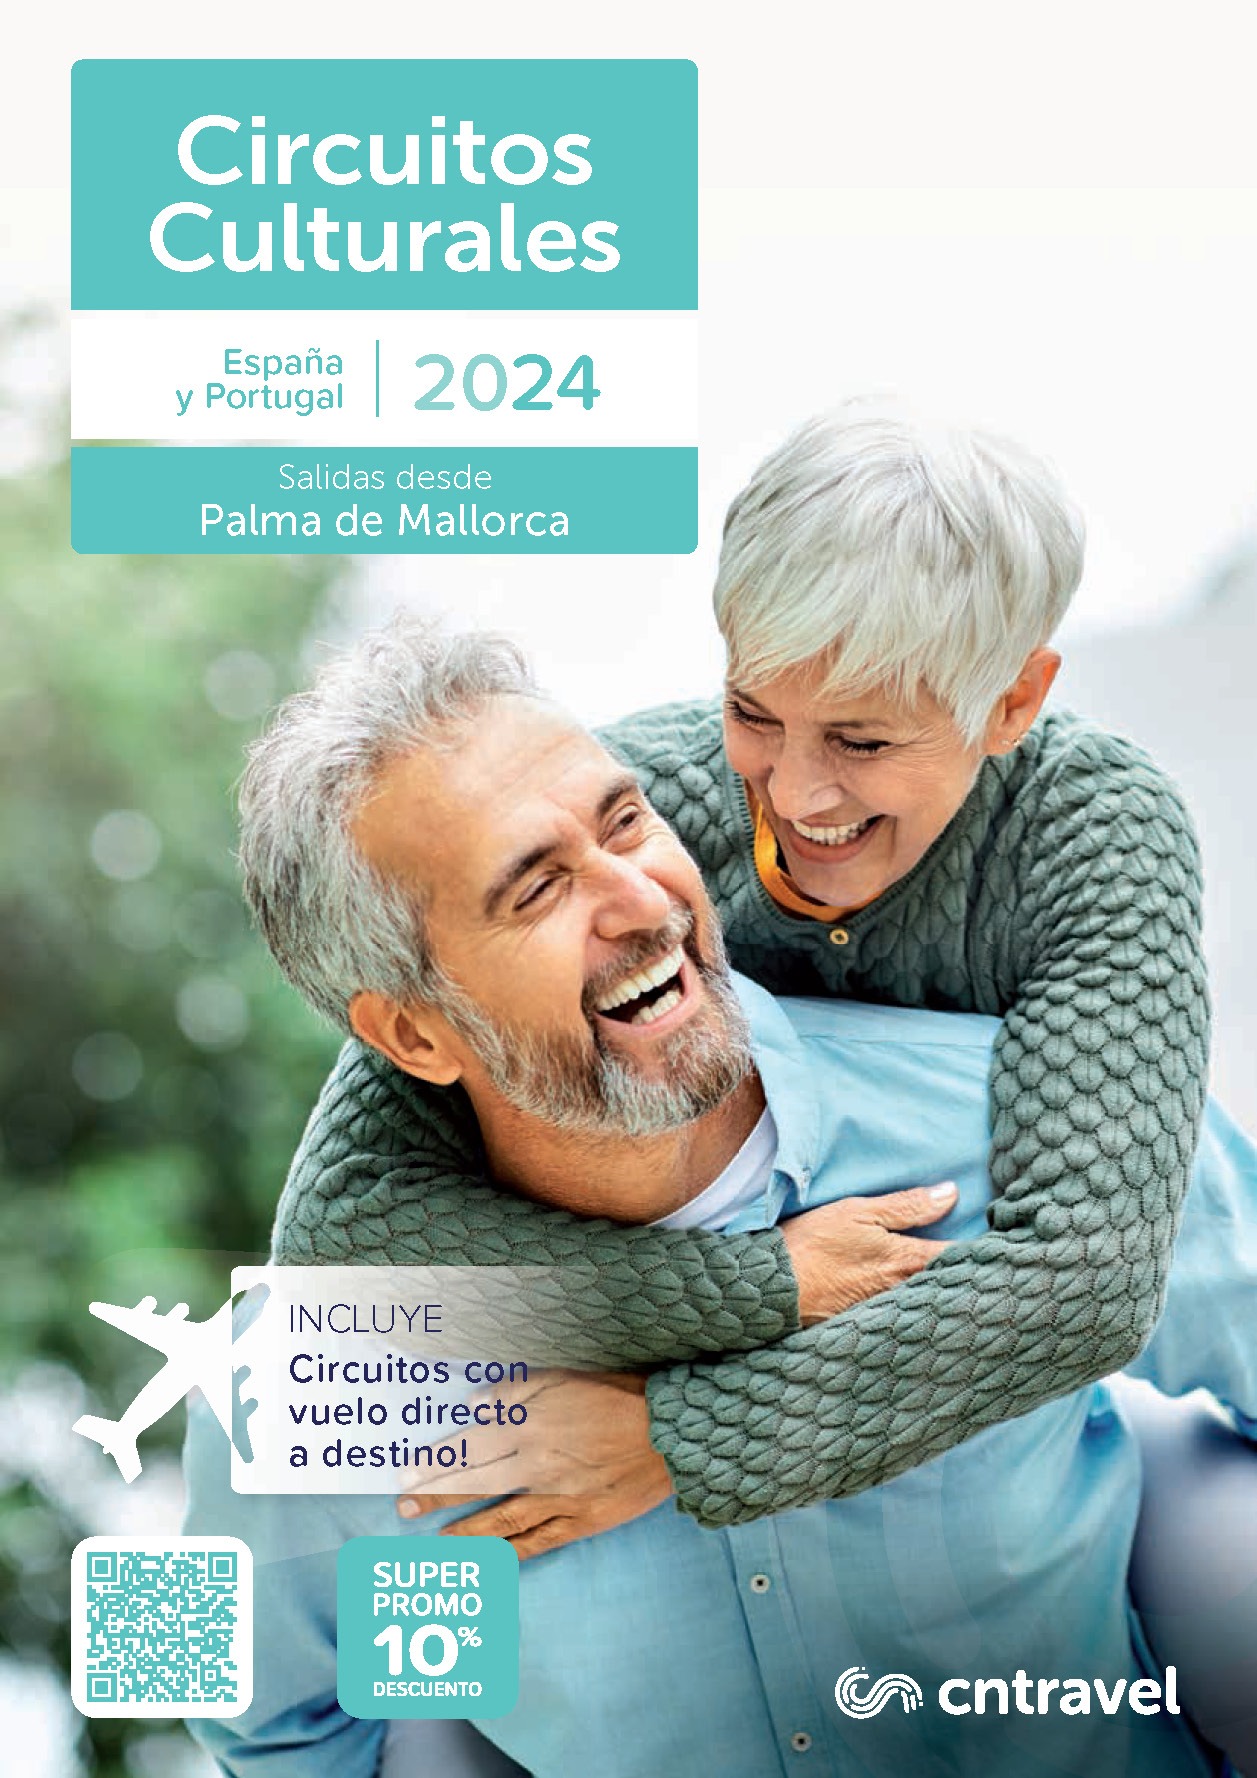 Catalogo CN Travel Circuitos Culturales 2024 Espana y Portugal salidas Palma de Mallorca